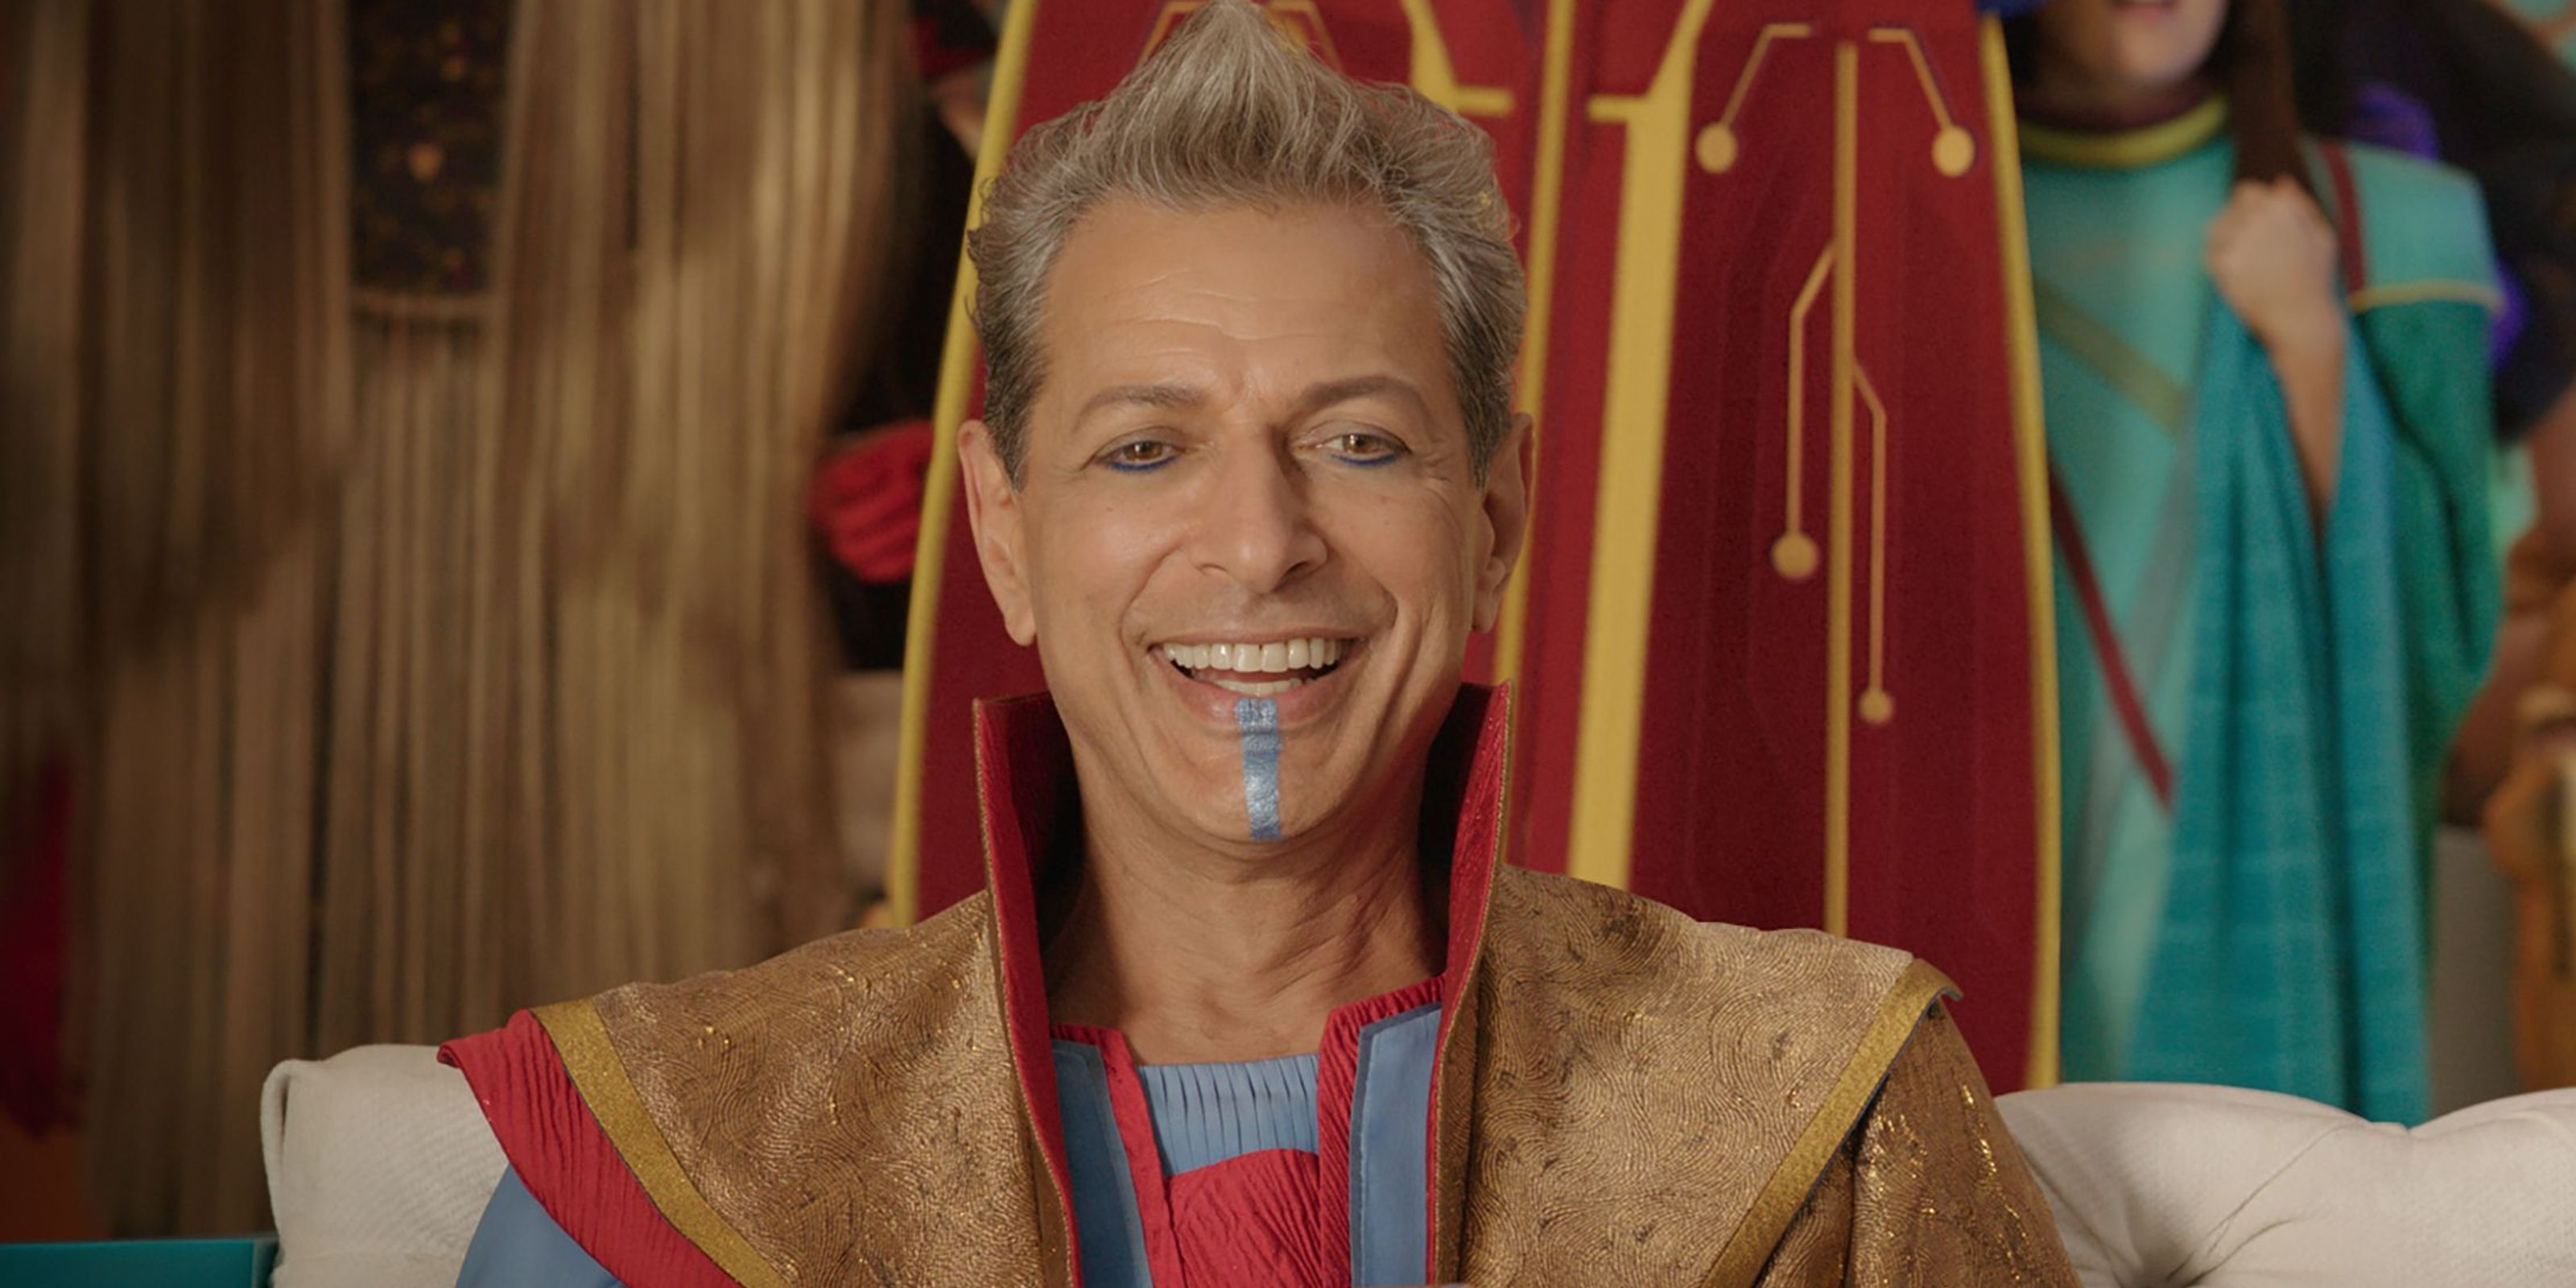 The Grandmaster: Jeff Goldblum's Thor Character, Explained